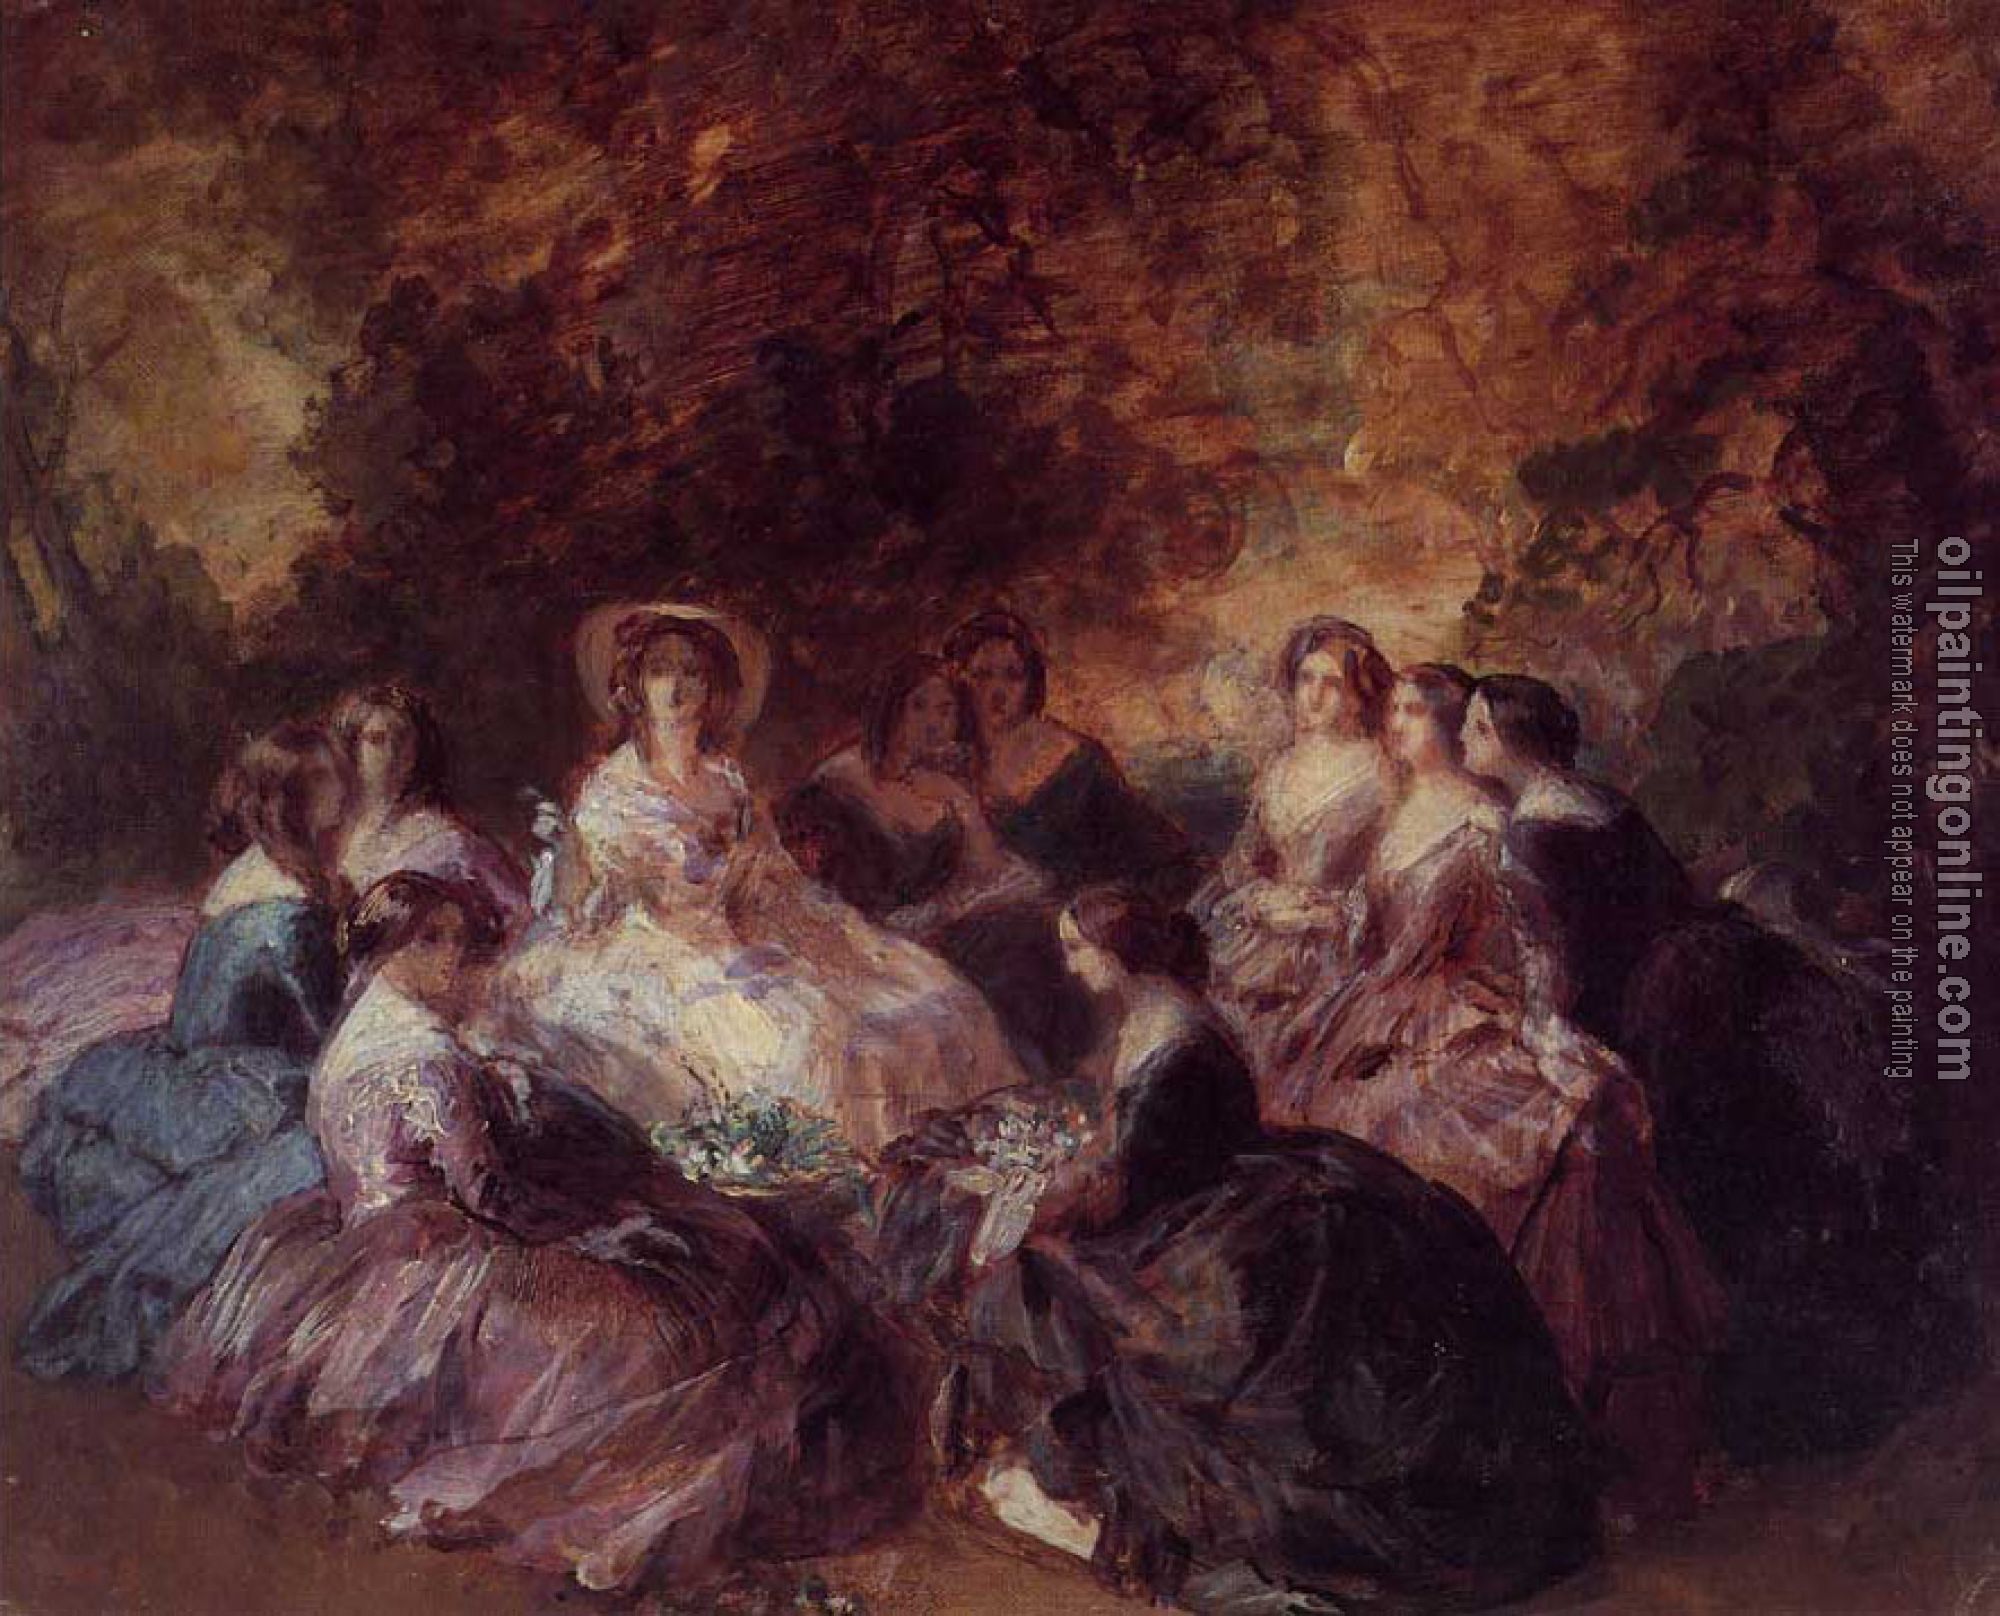 Winterhalter, Franz Xavier - The Empress Eugenie Surrounded by her Ladies in Waiting 1855